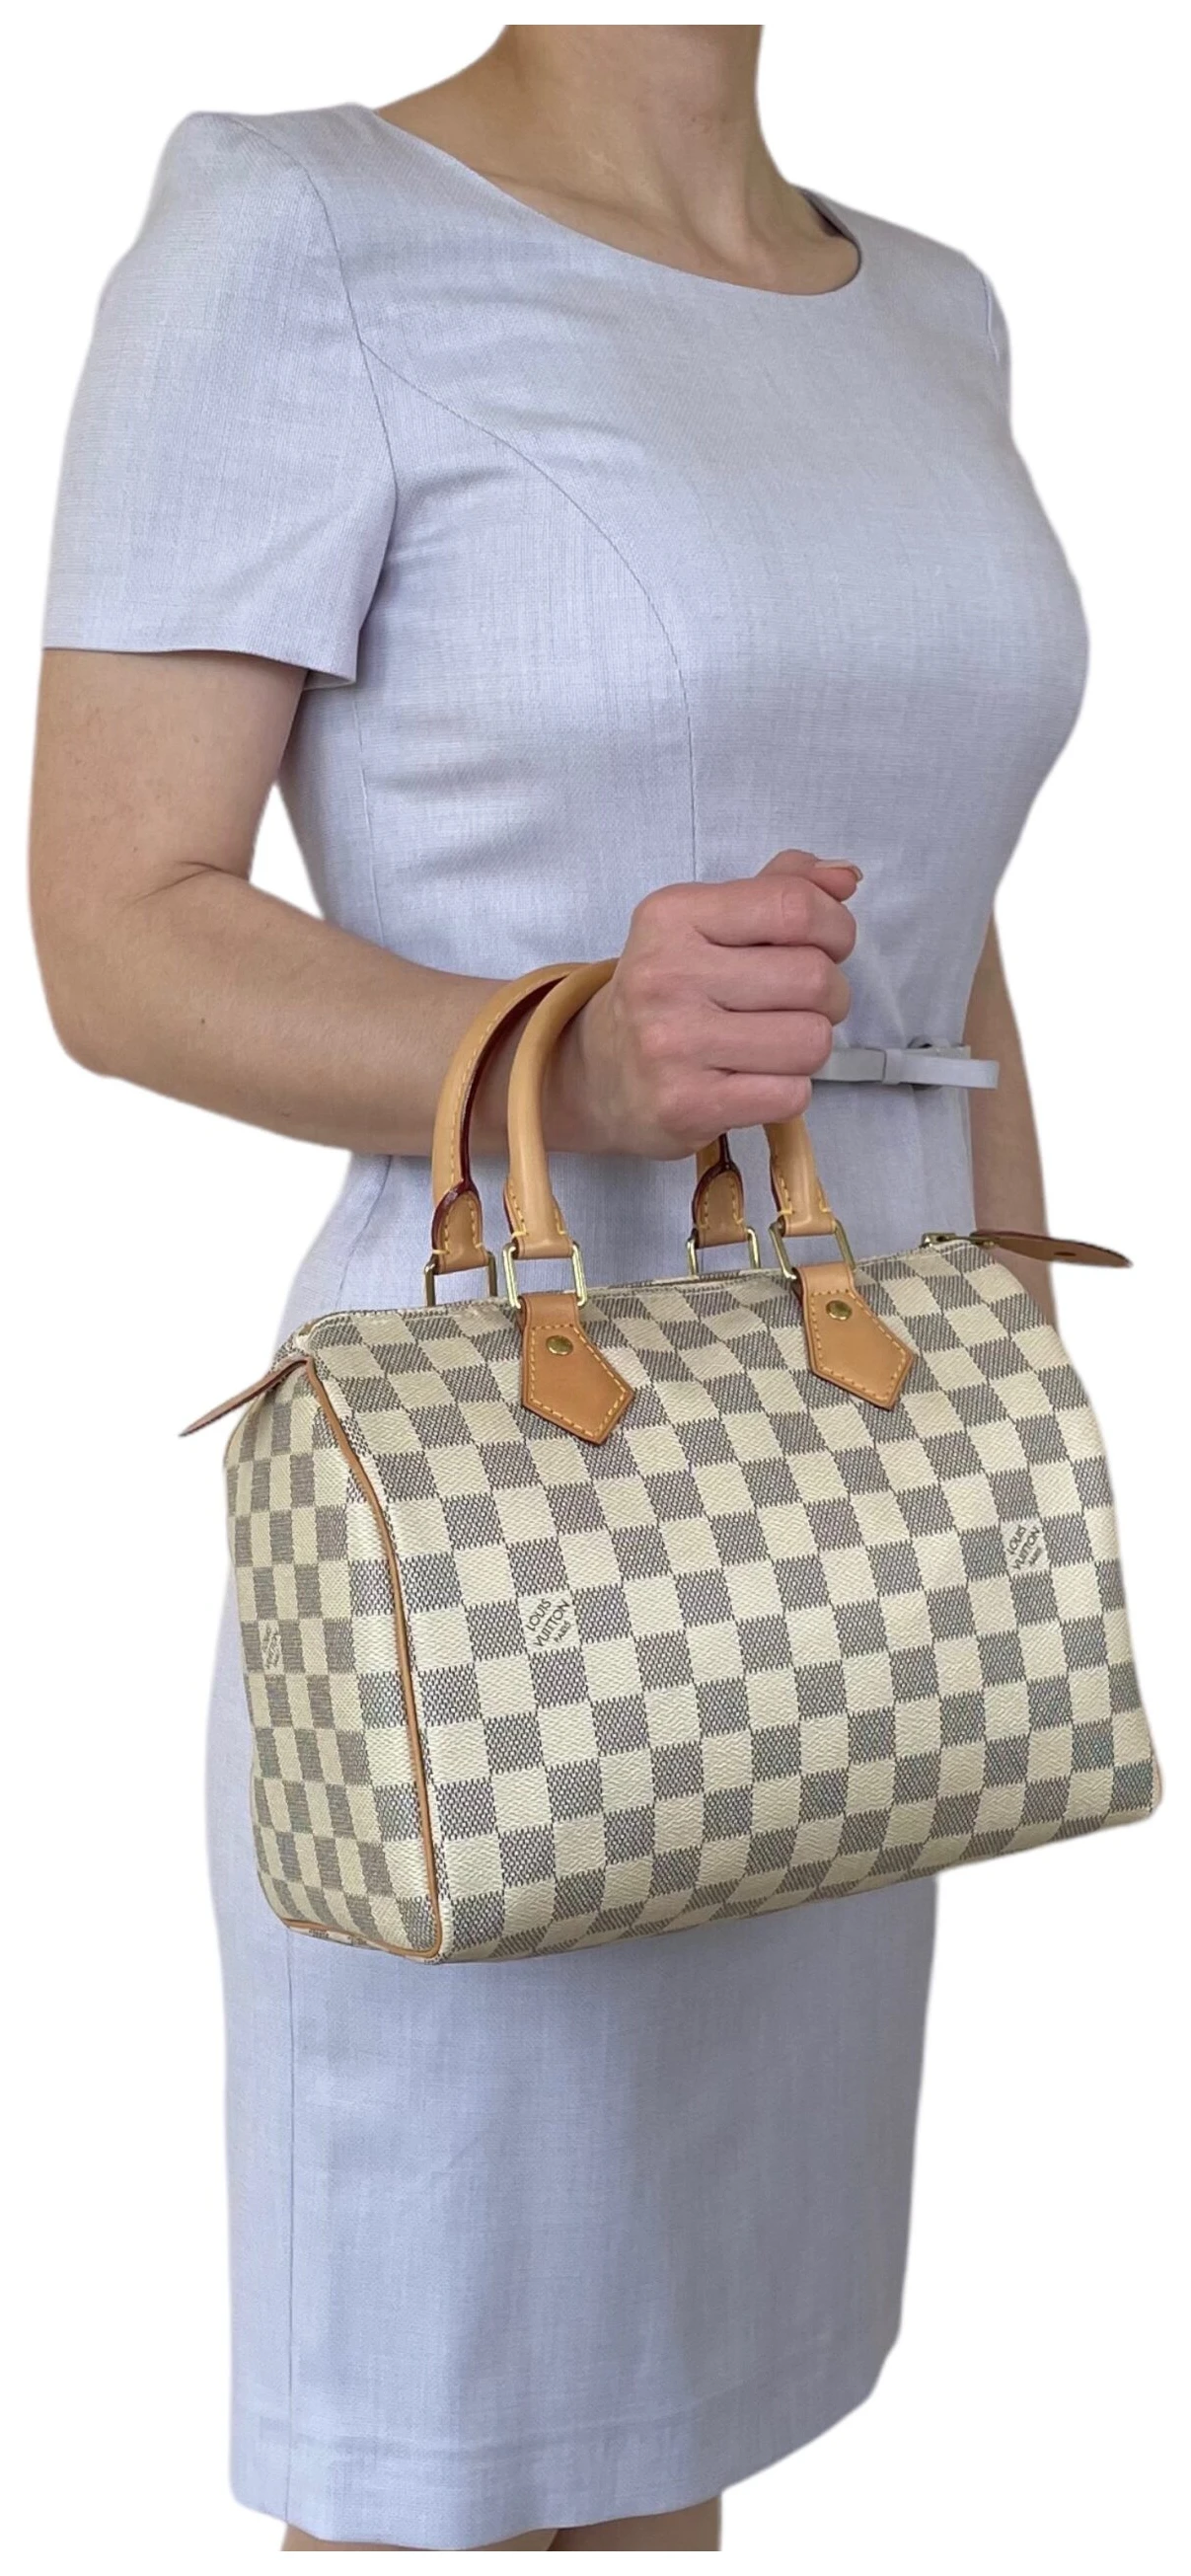 Louis Vuitton Speedy 25 Damier Azur - I Love Handbags